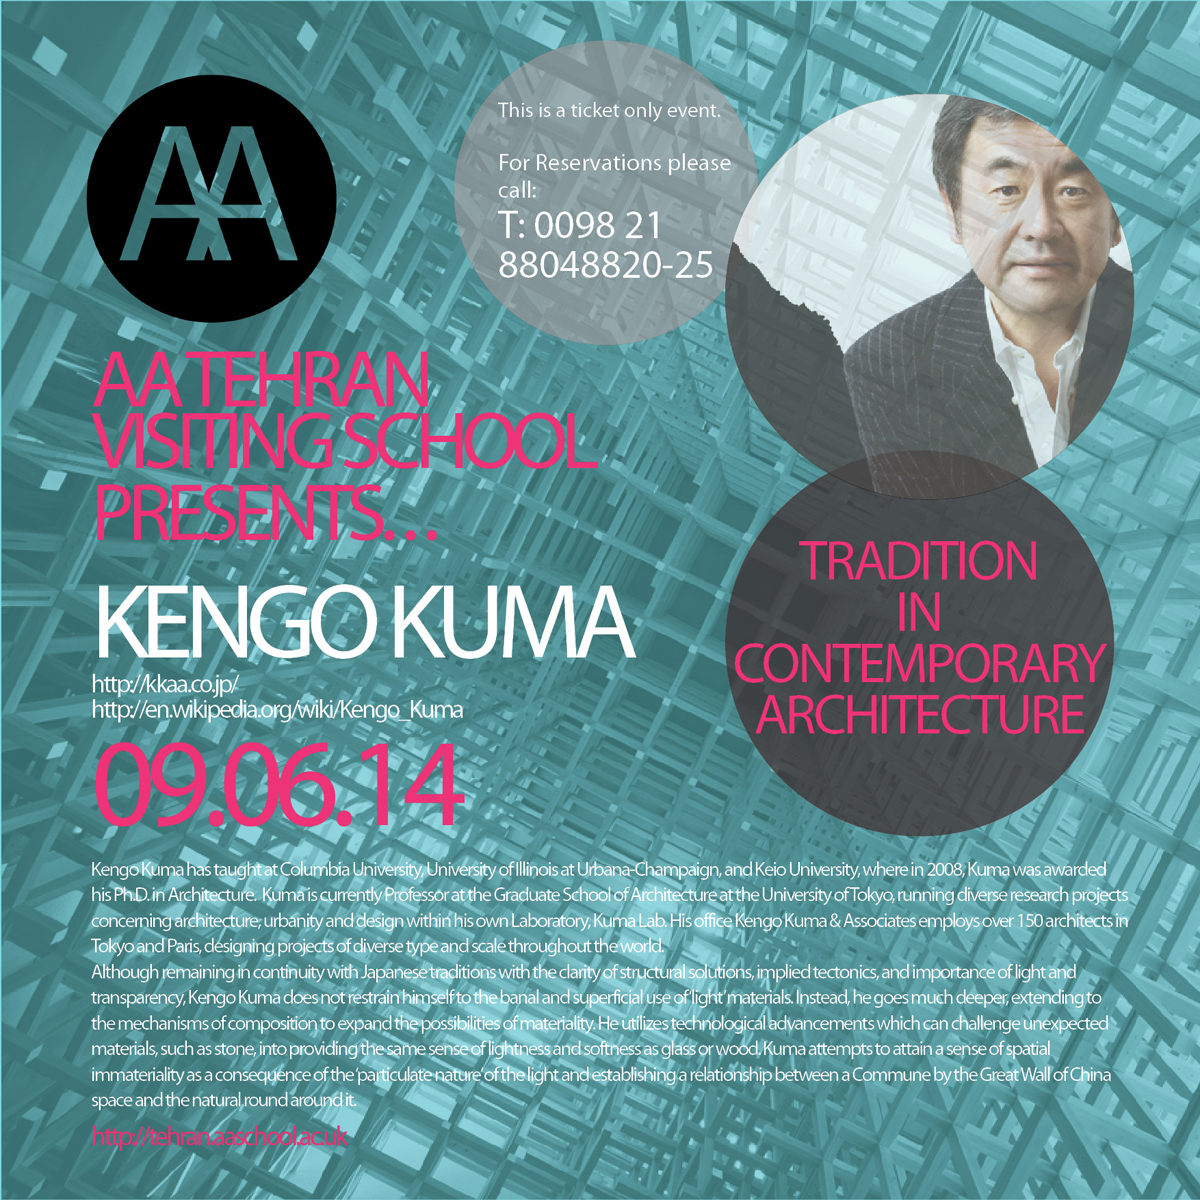 AA Tehran VS – Kengo Kuma – Lecture Series